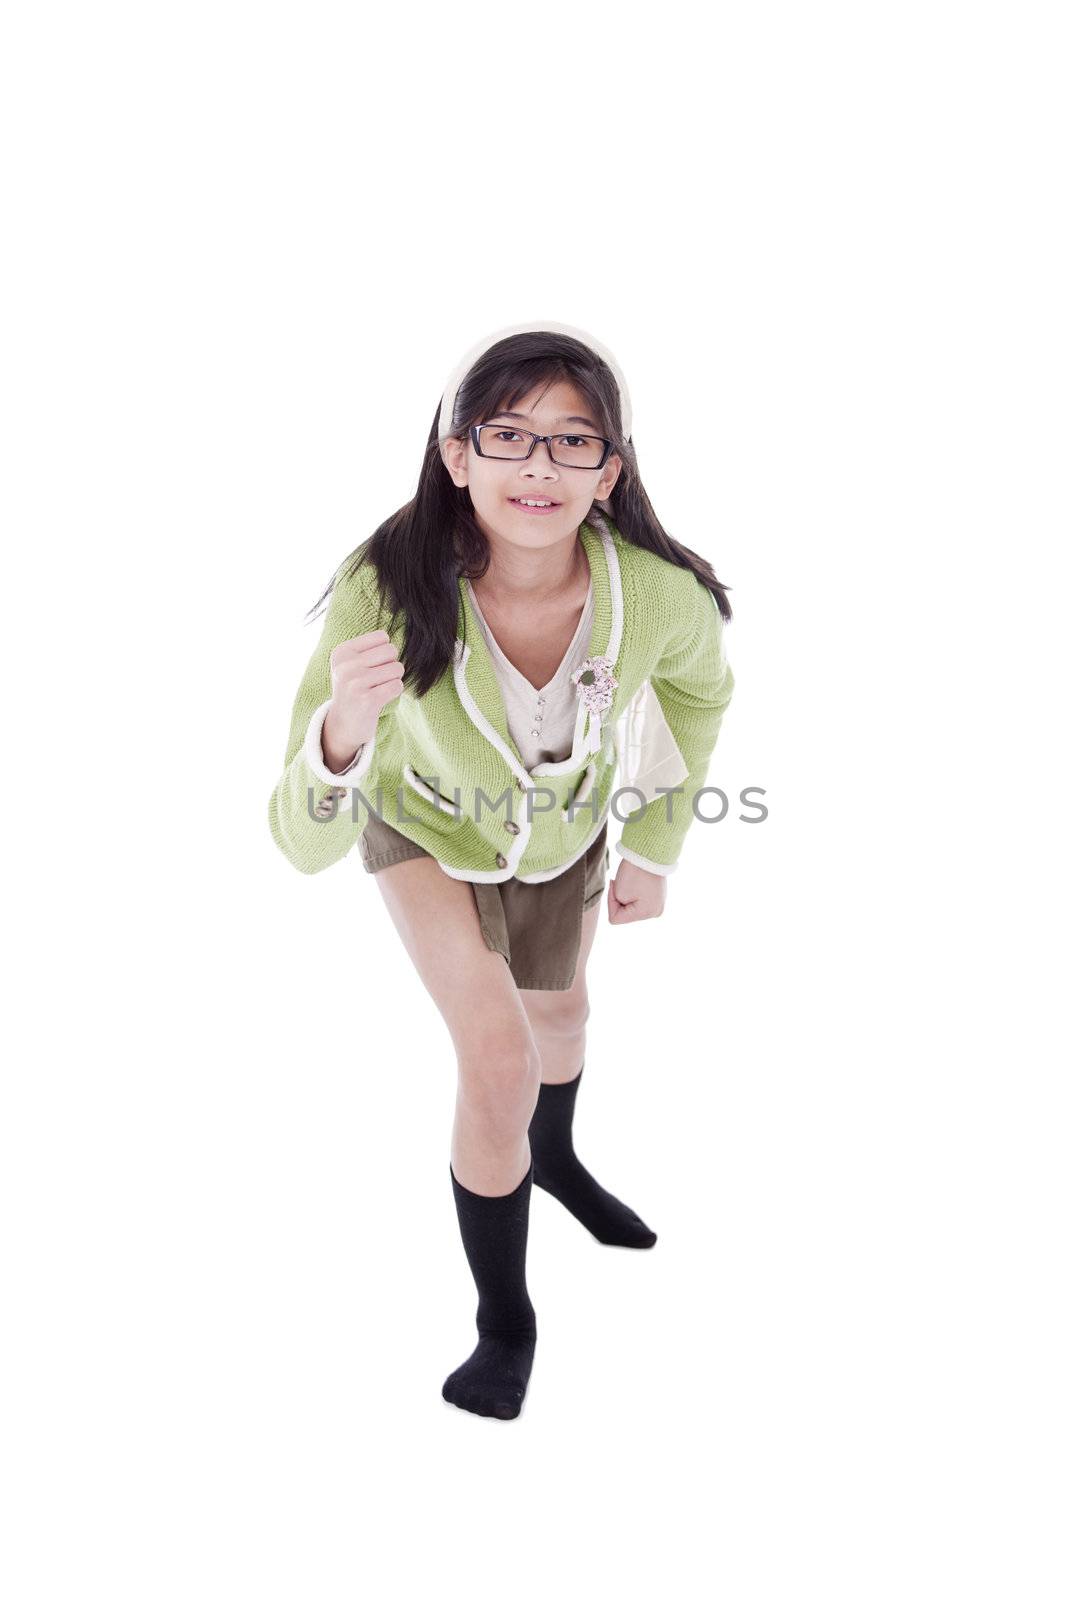 Girl in green sweater with  running stance  by jarenwicklund